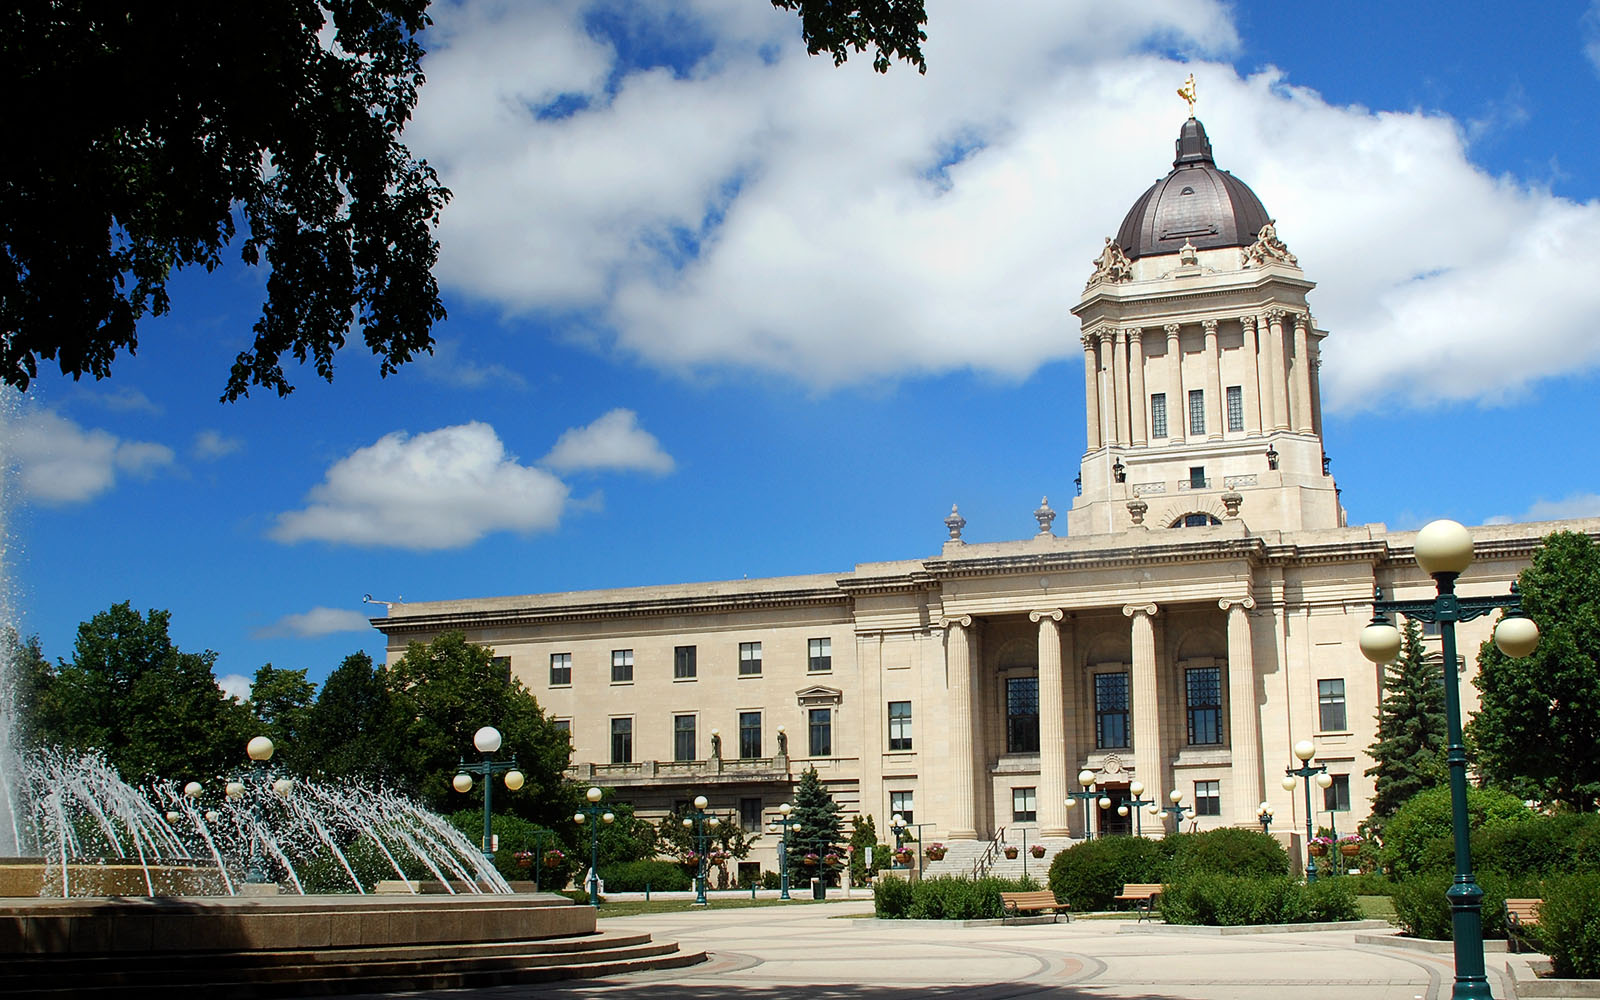 Manitoba Legislative Building in Winnipeg